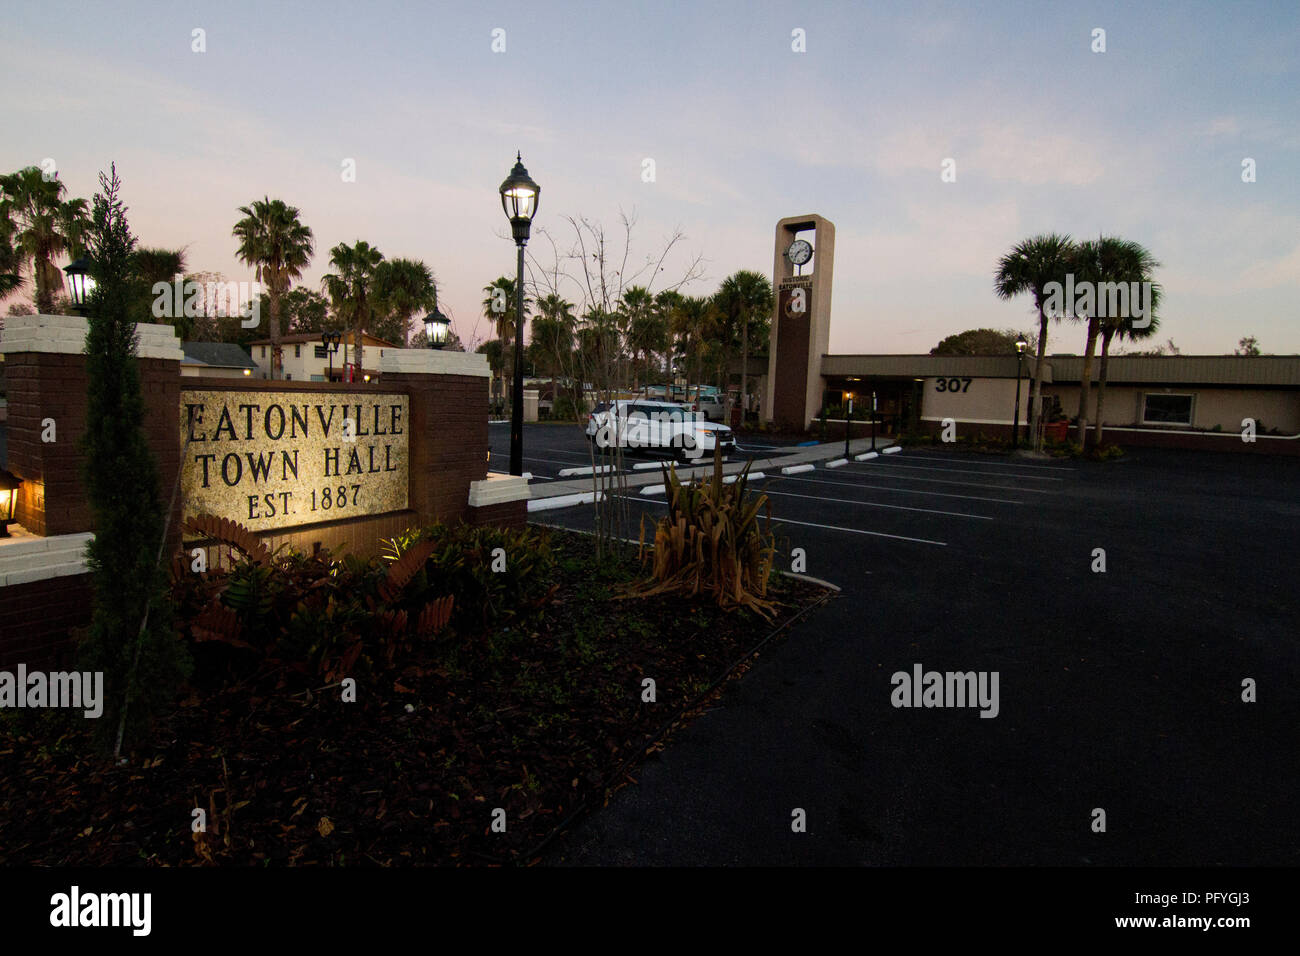 Eatonville, Florida, town hall Stock Photo